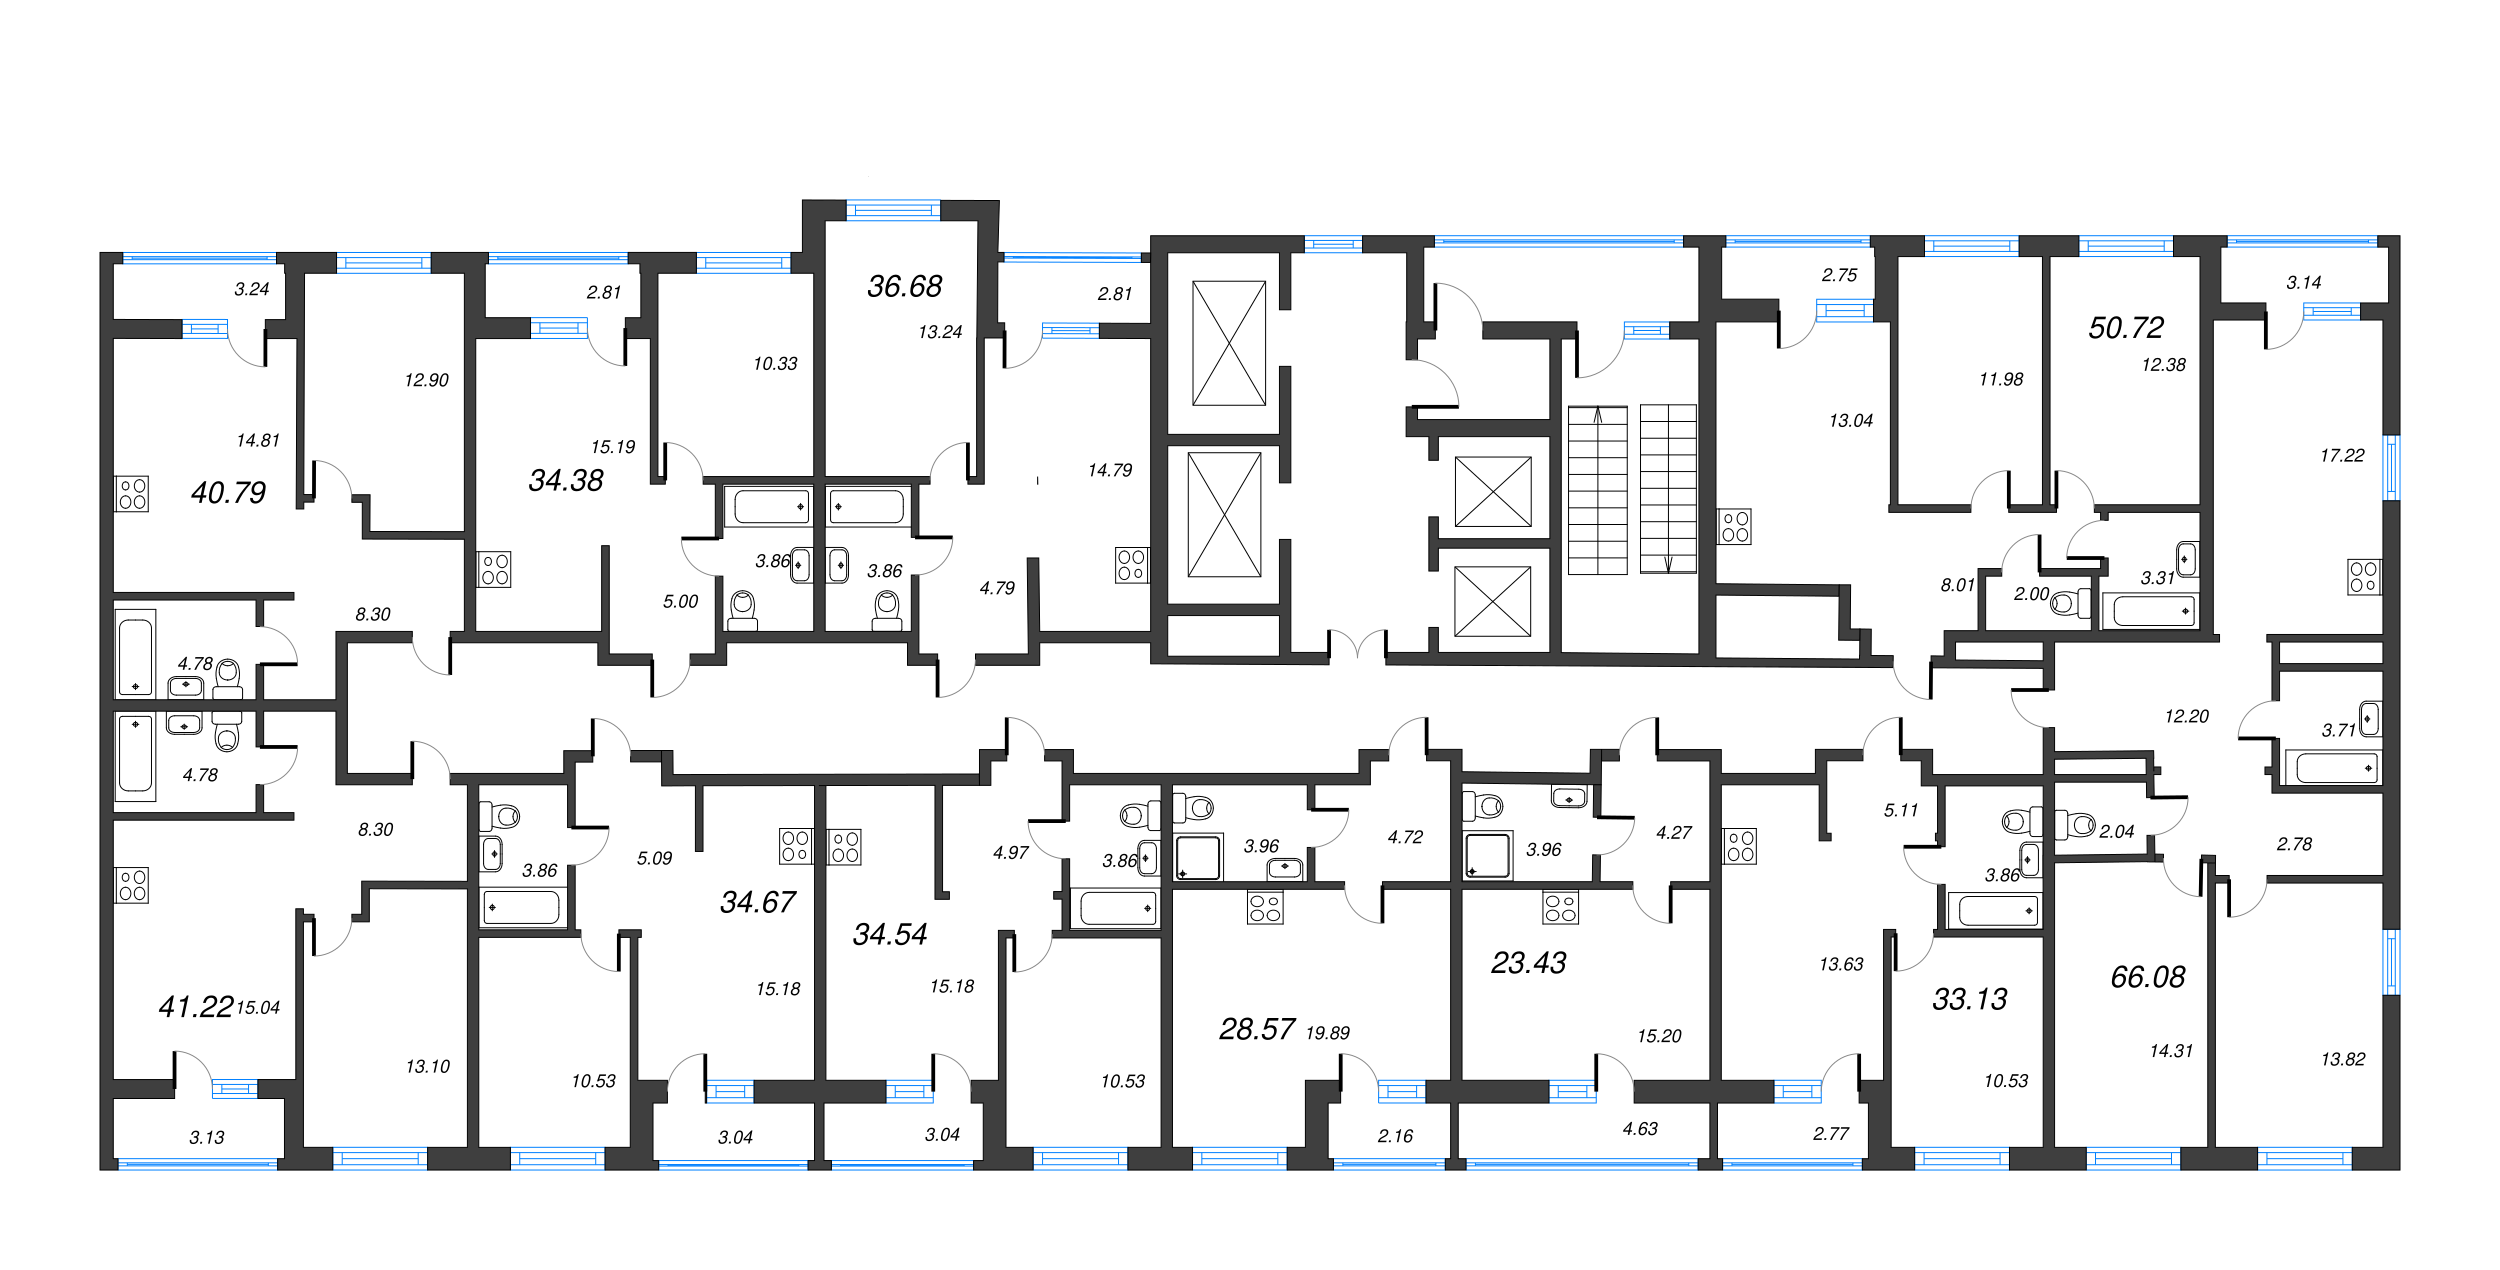 3-комнатная (Евро) квартира, 66.08 м² - планировка этажа